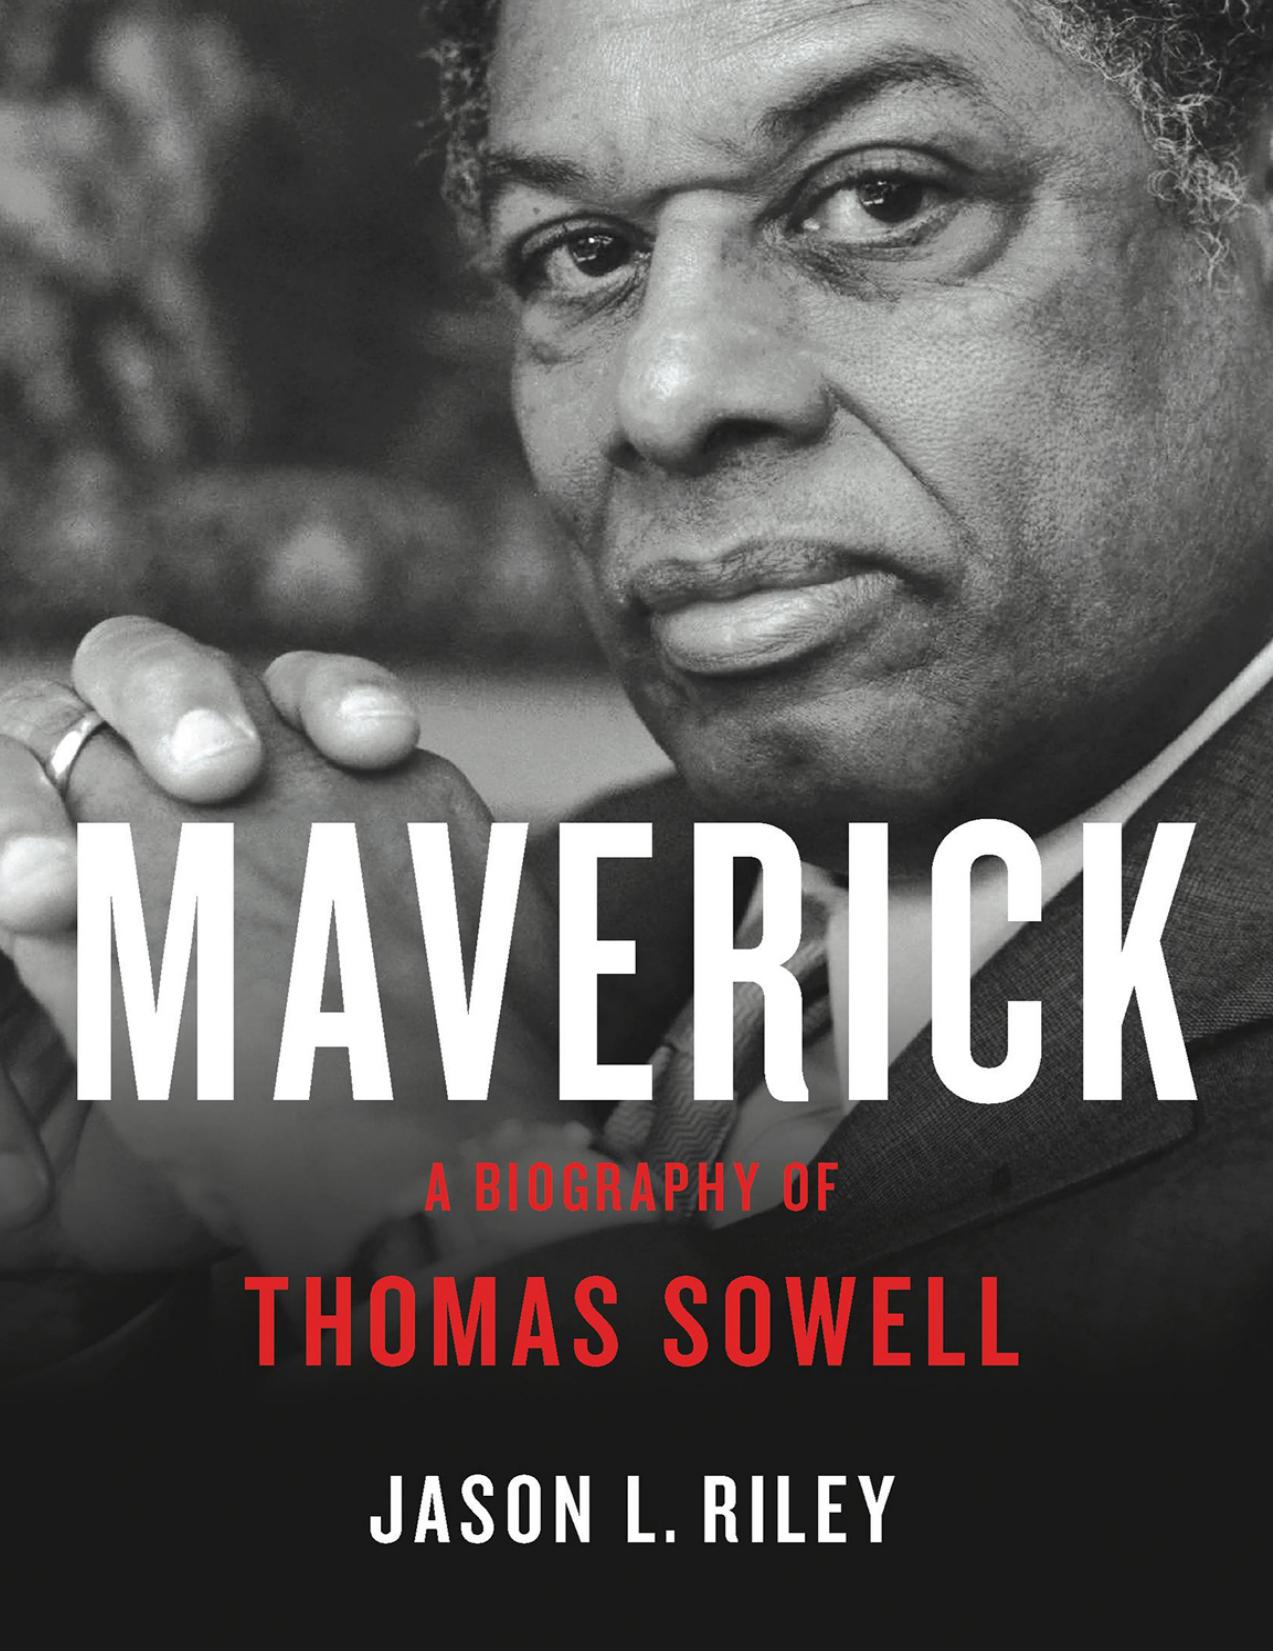 Maverick; A Biography of Thomas Sowell by Jason L. Riley